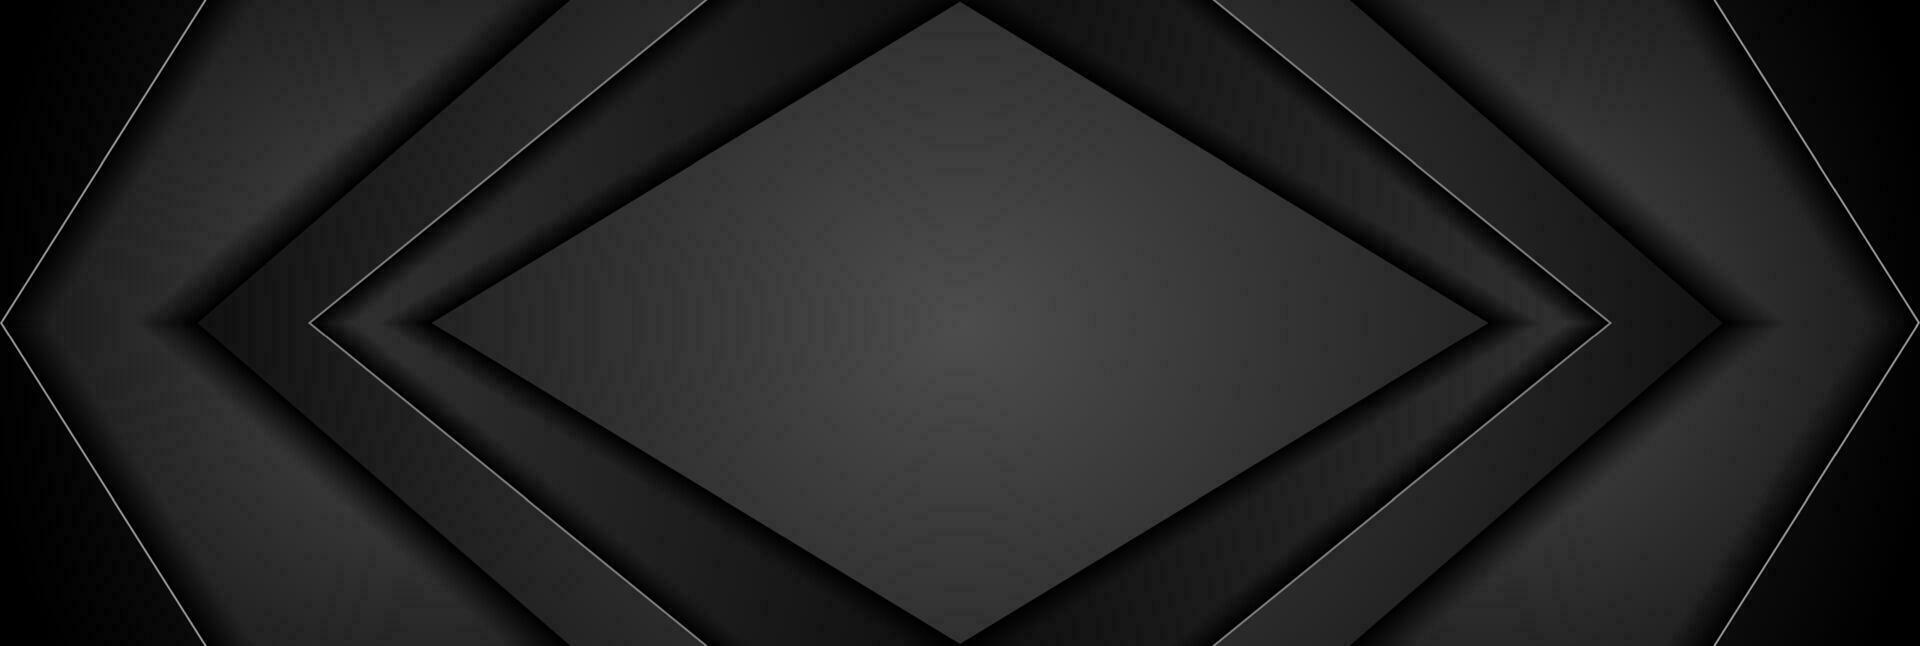 Black hi-tech concept abstract background vector